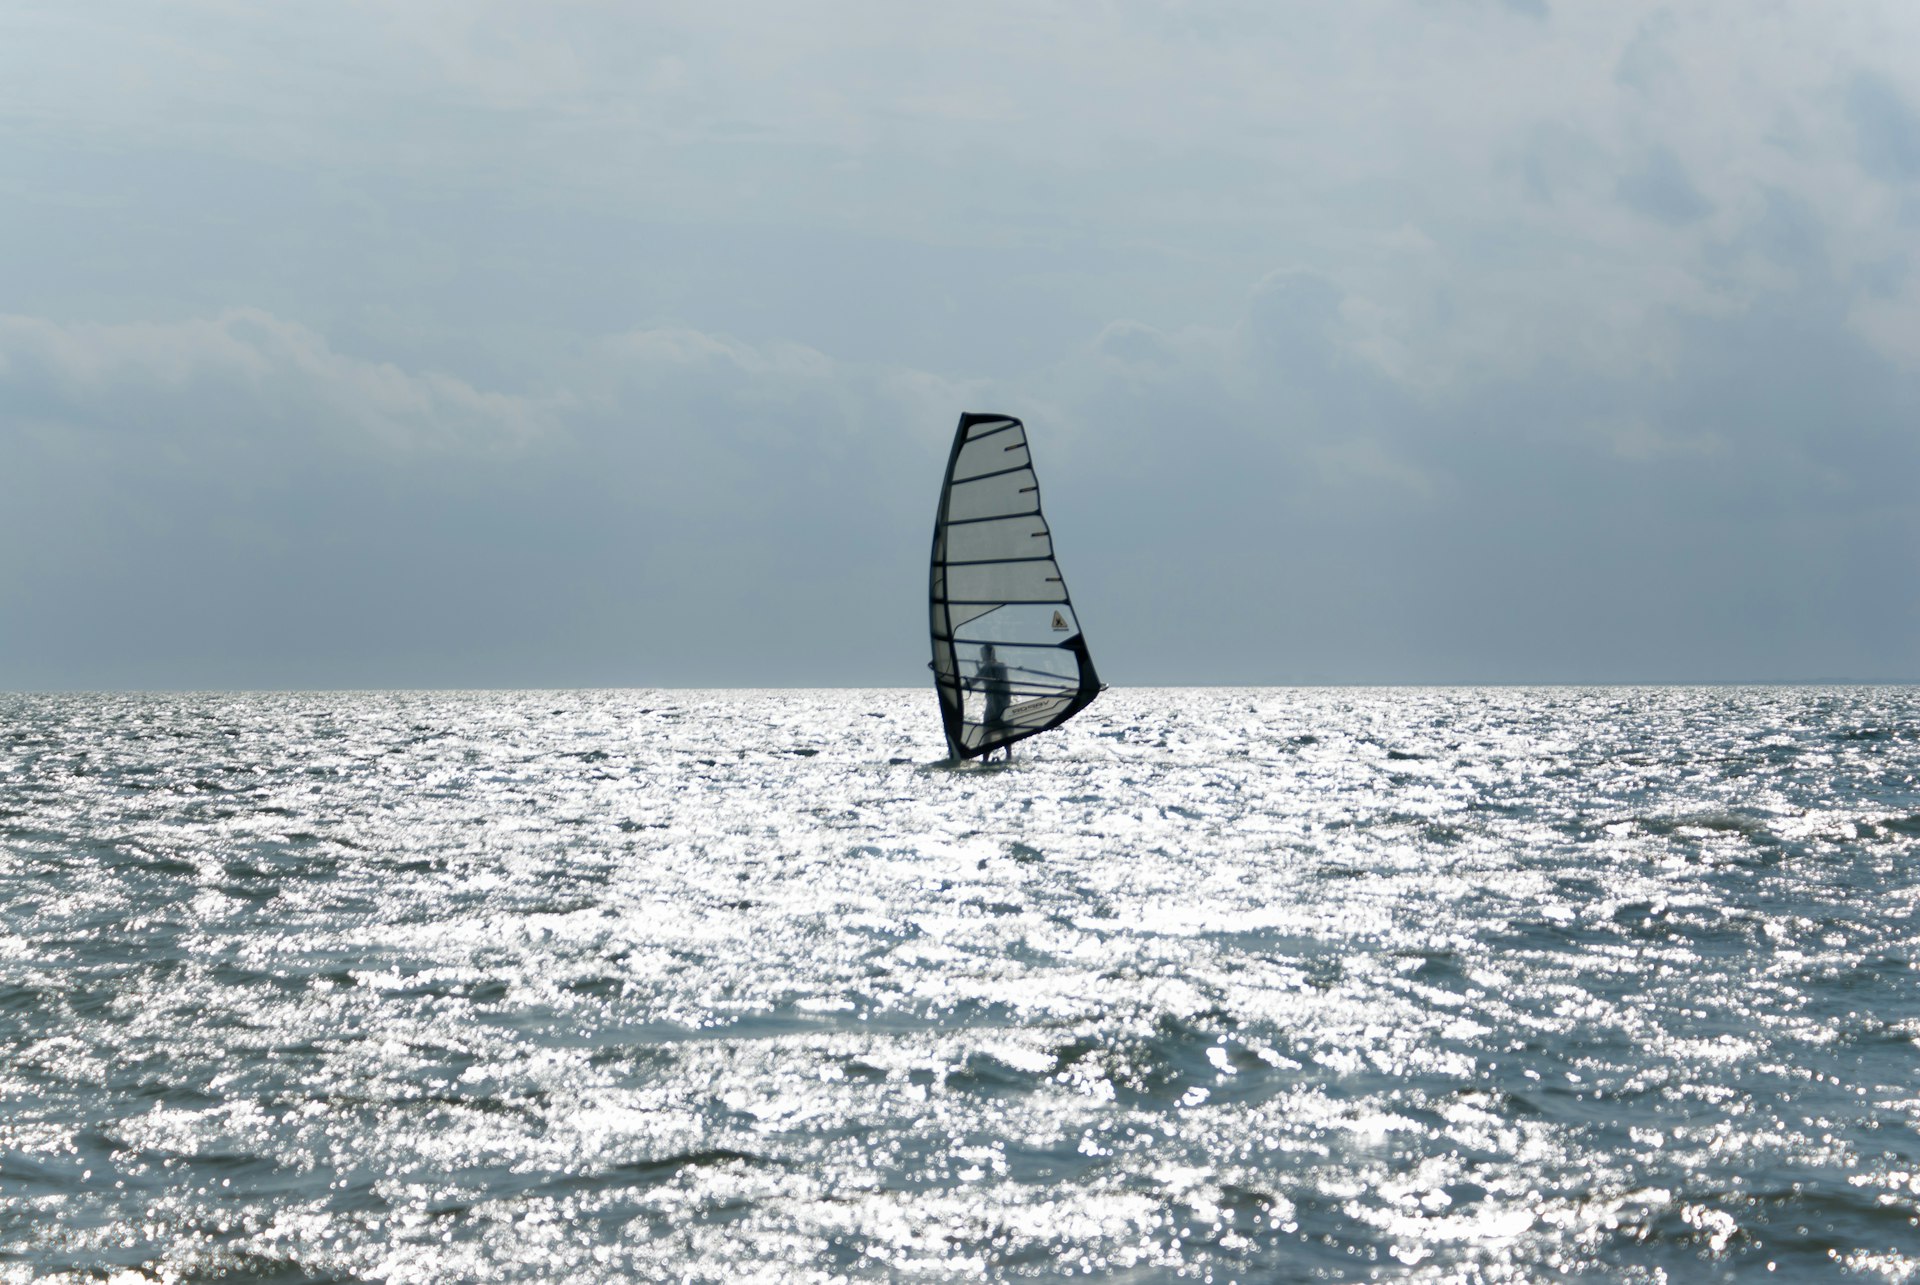 Windsurfer on the water near Key Biscayne, Florida